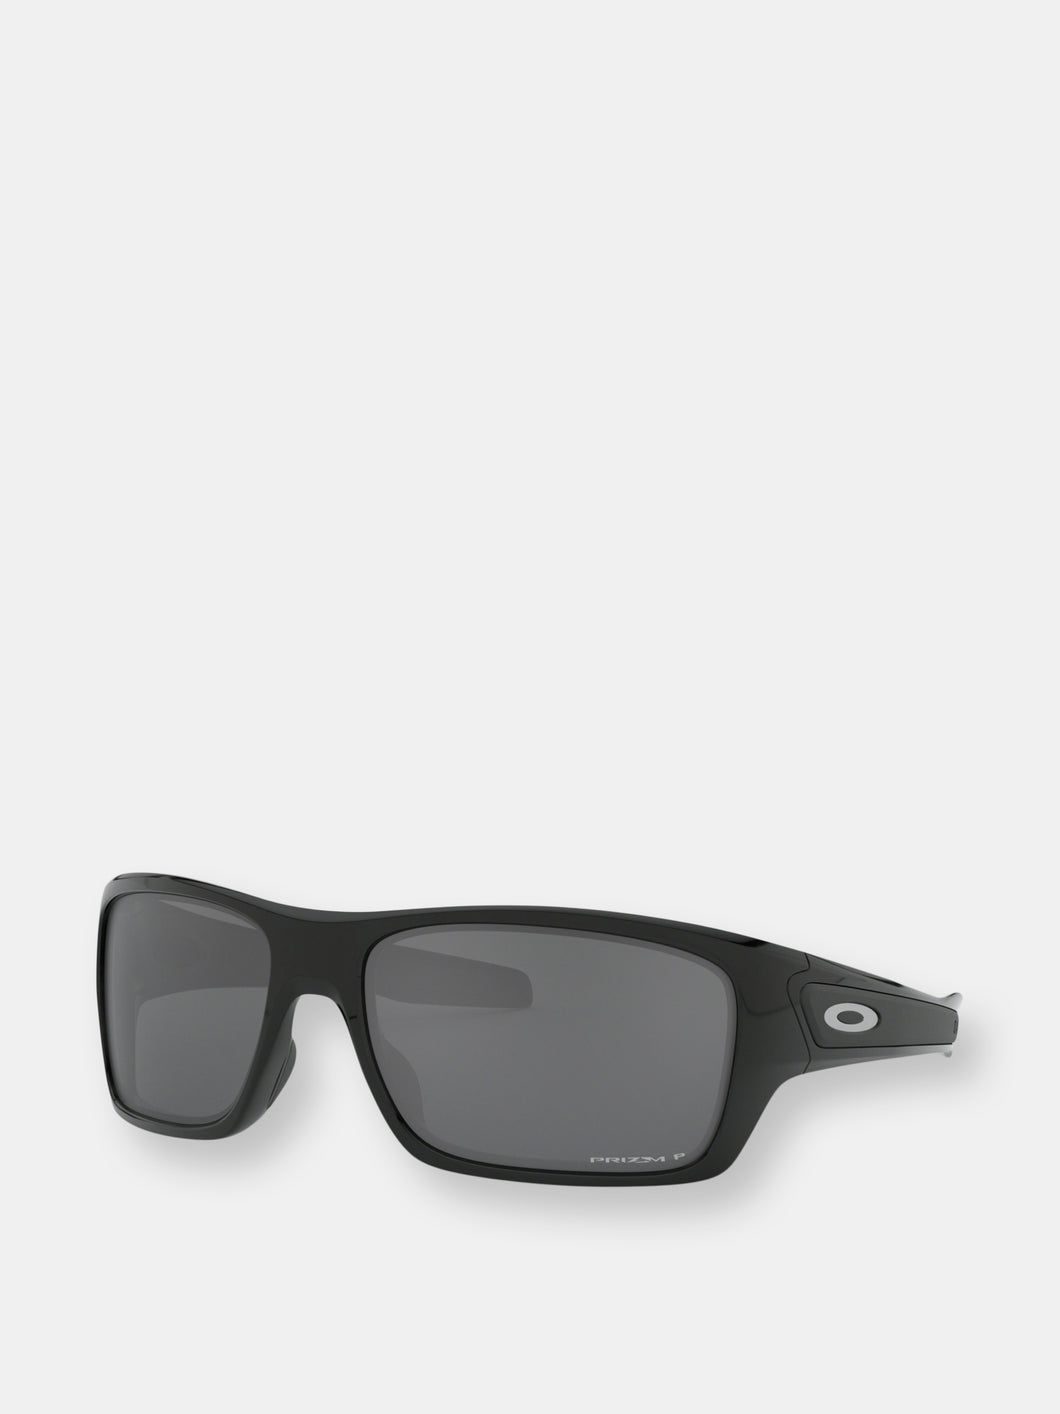 Oakley Men's Polarized Turbine 0OO9263-92634163 Black Rectangle Sunglasses